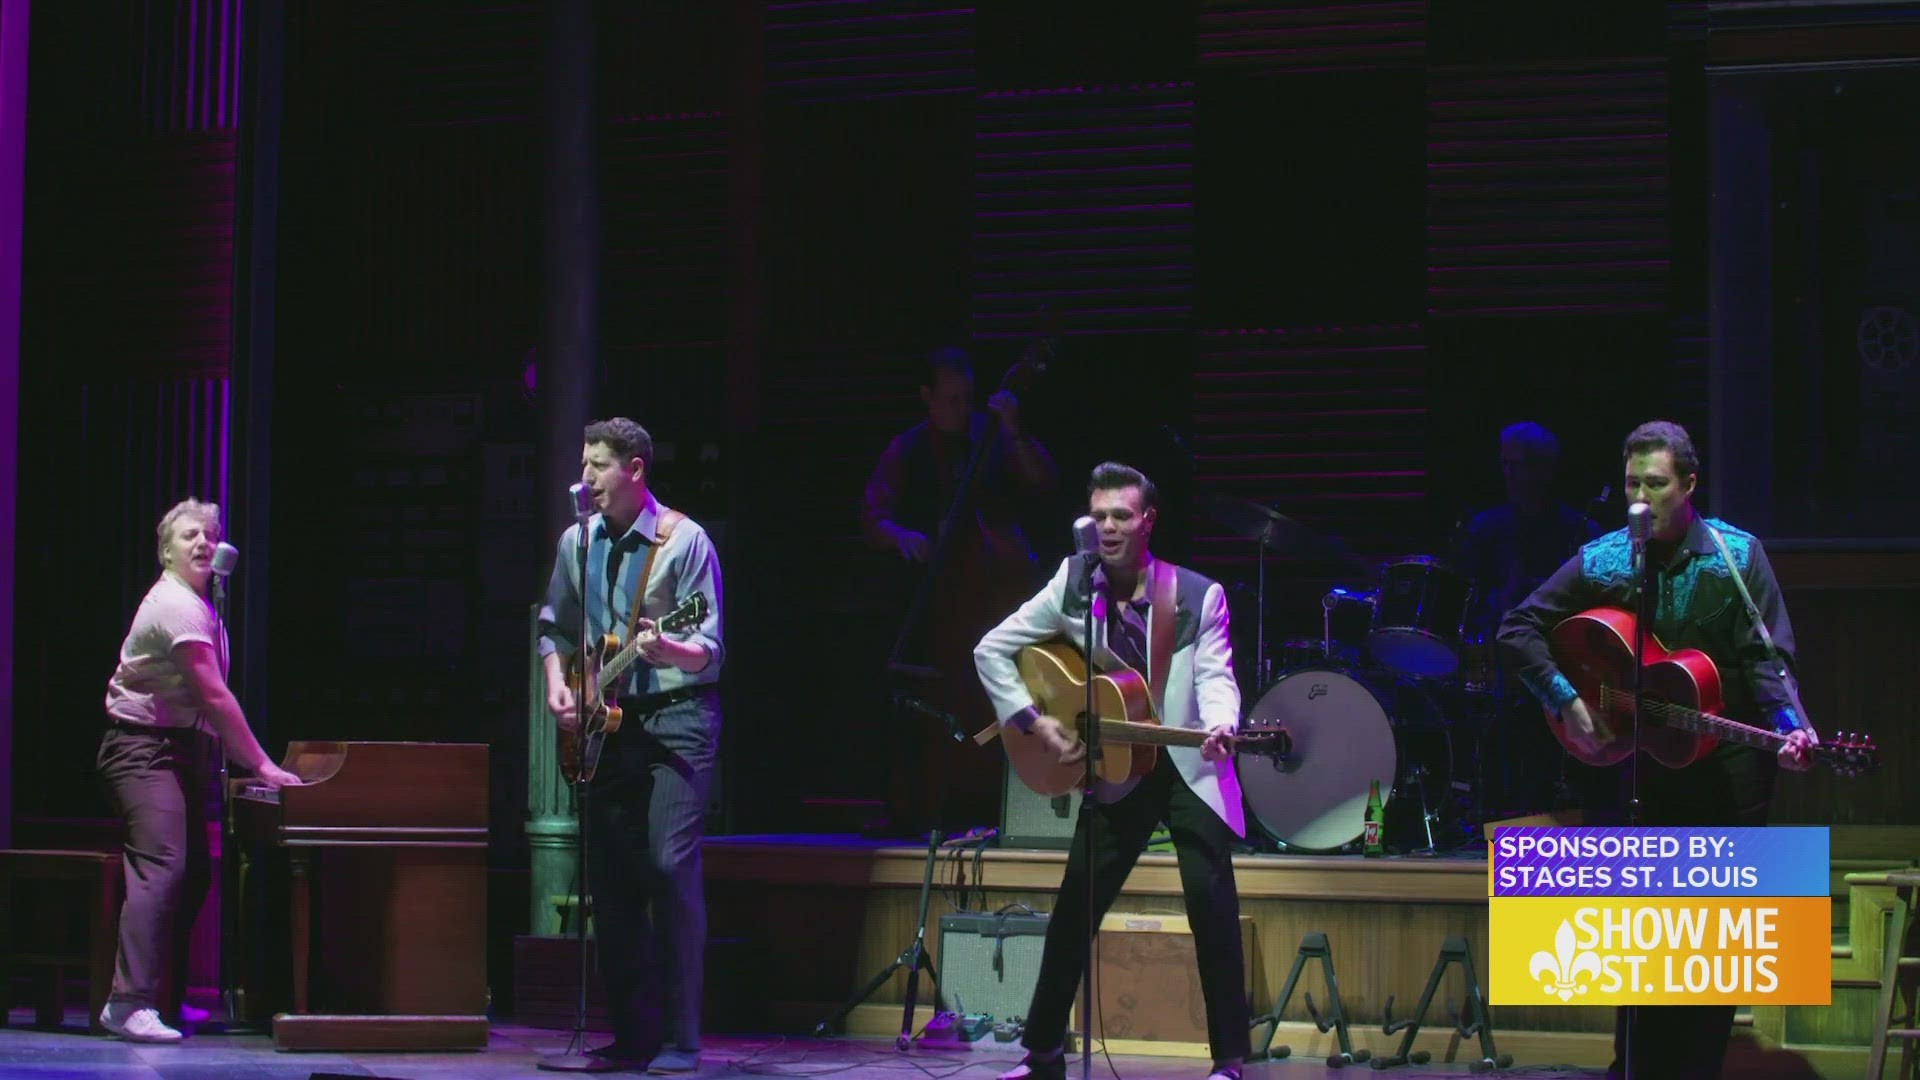 Million Dollar Quartet runs now through October 8th at the Kirkwood Performing Arts Center.